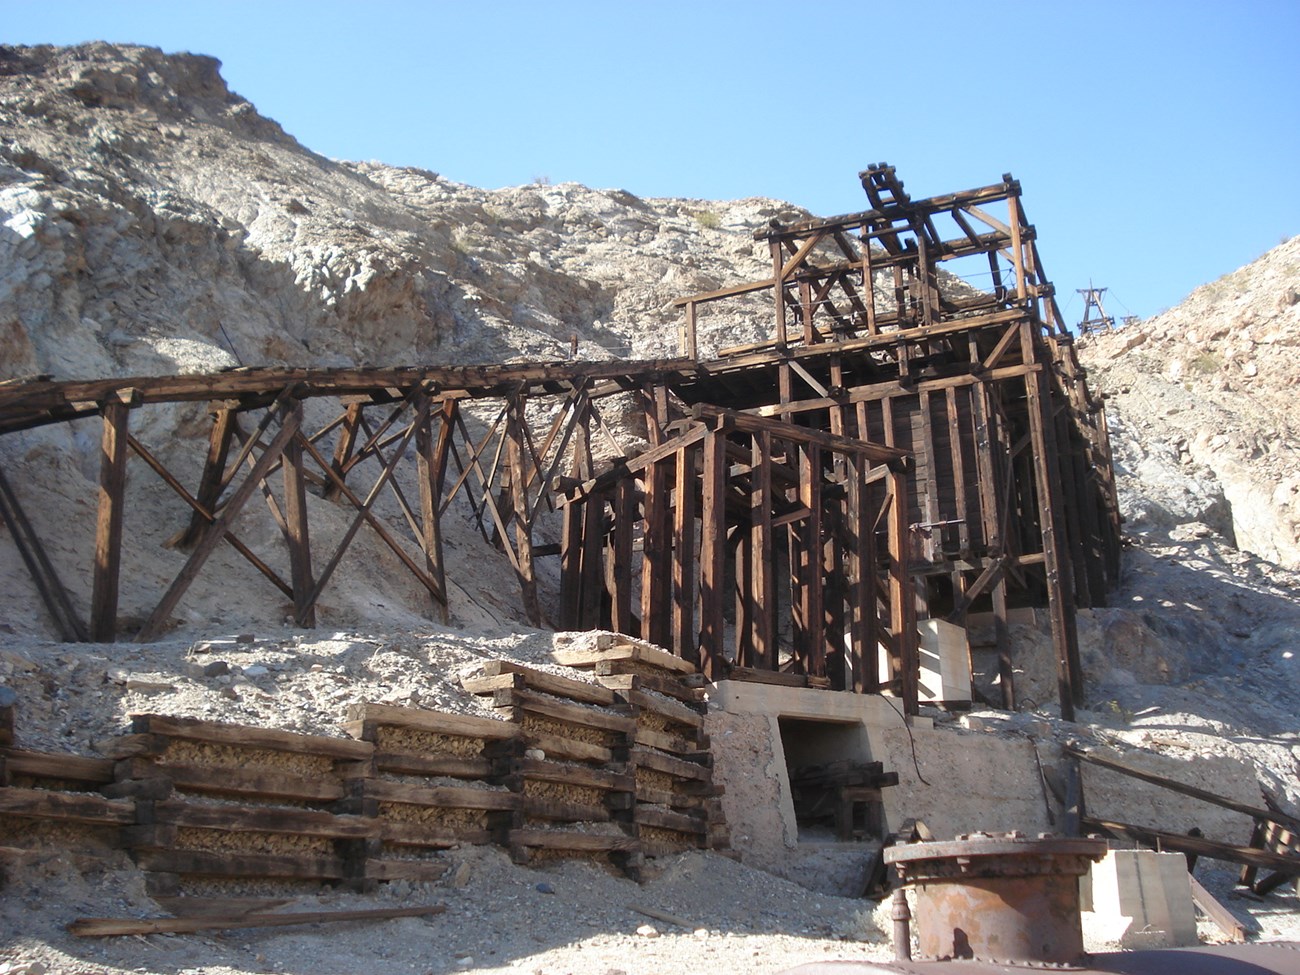 weathered mining equipment in the desert